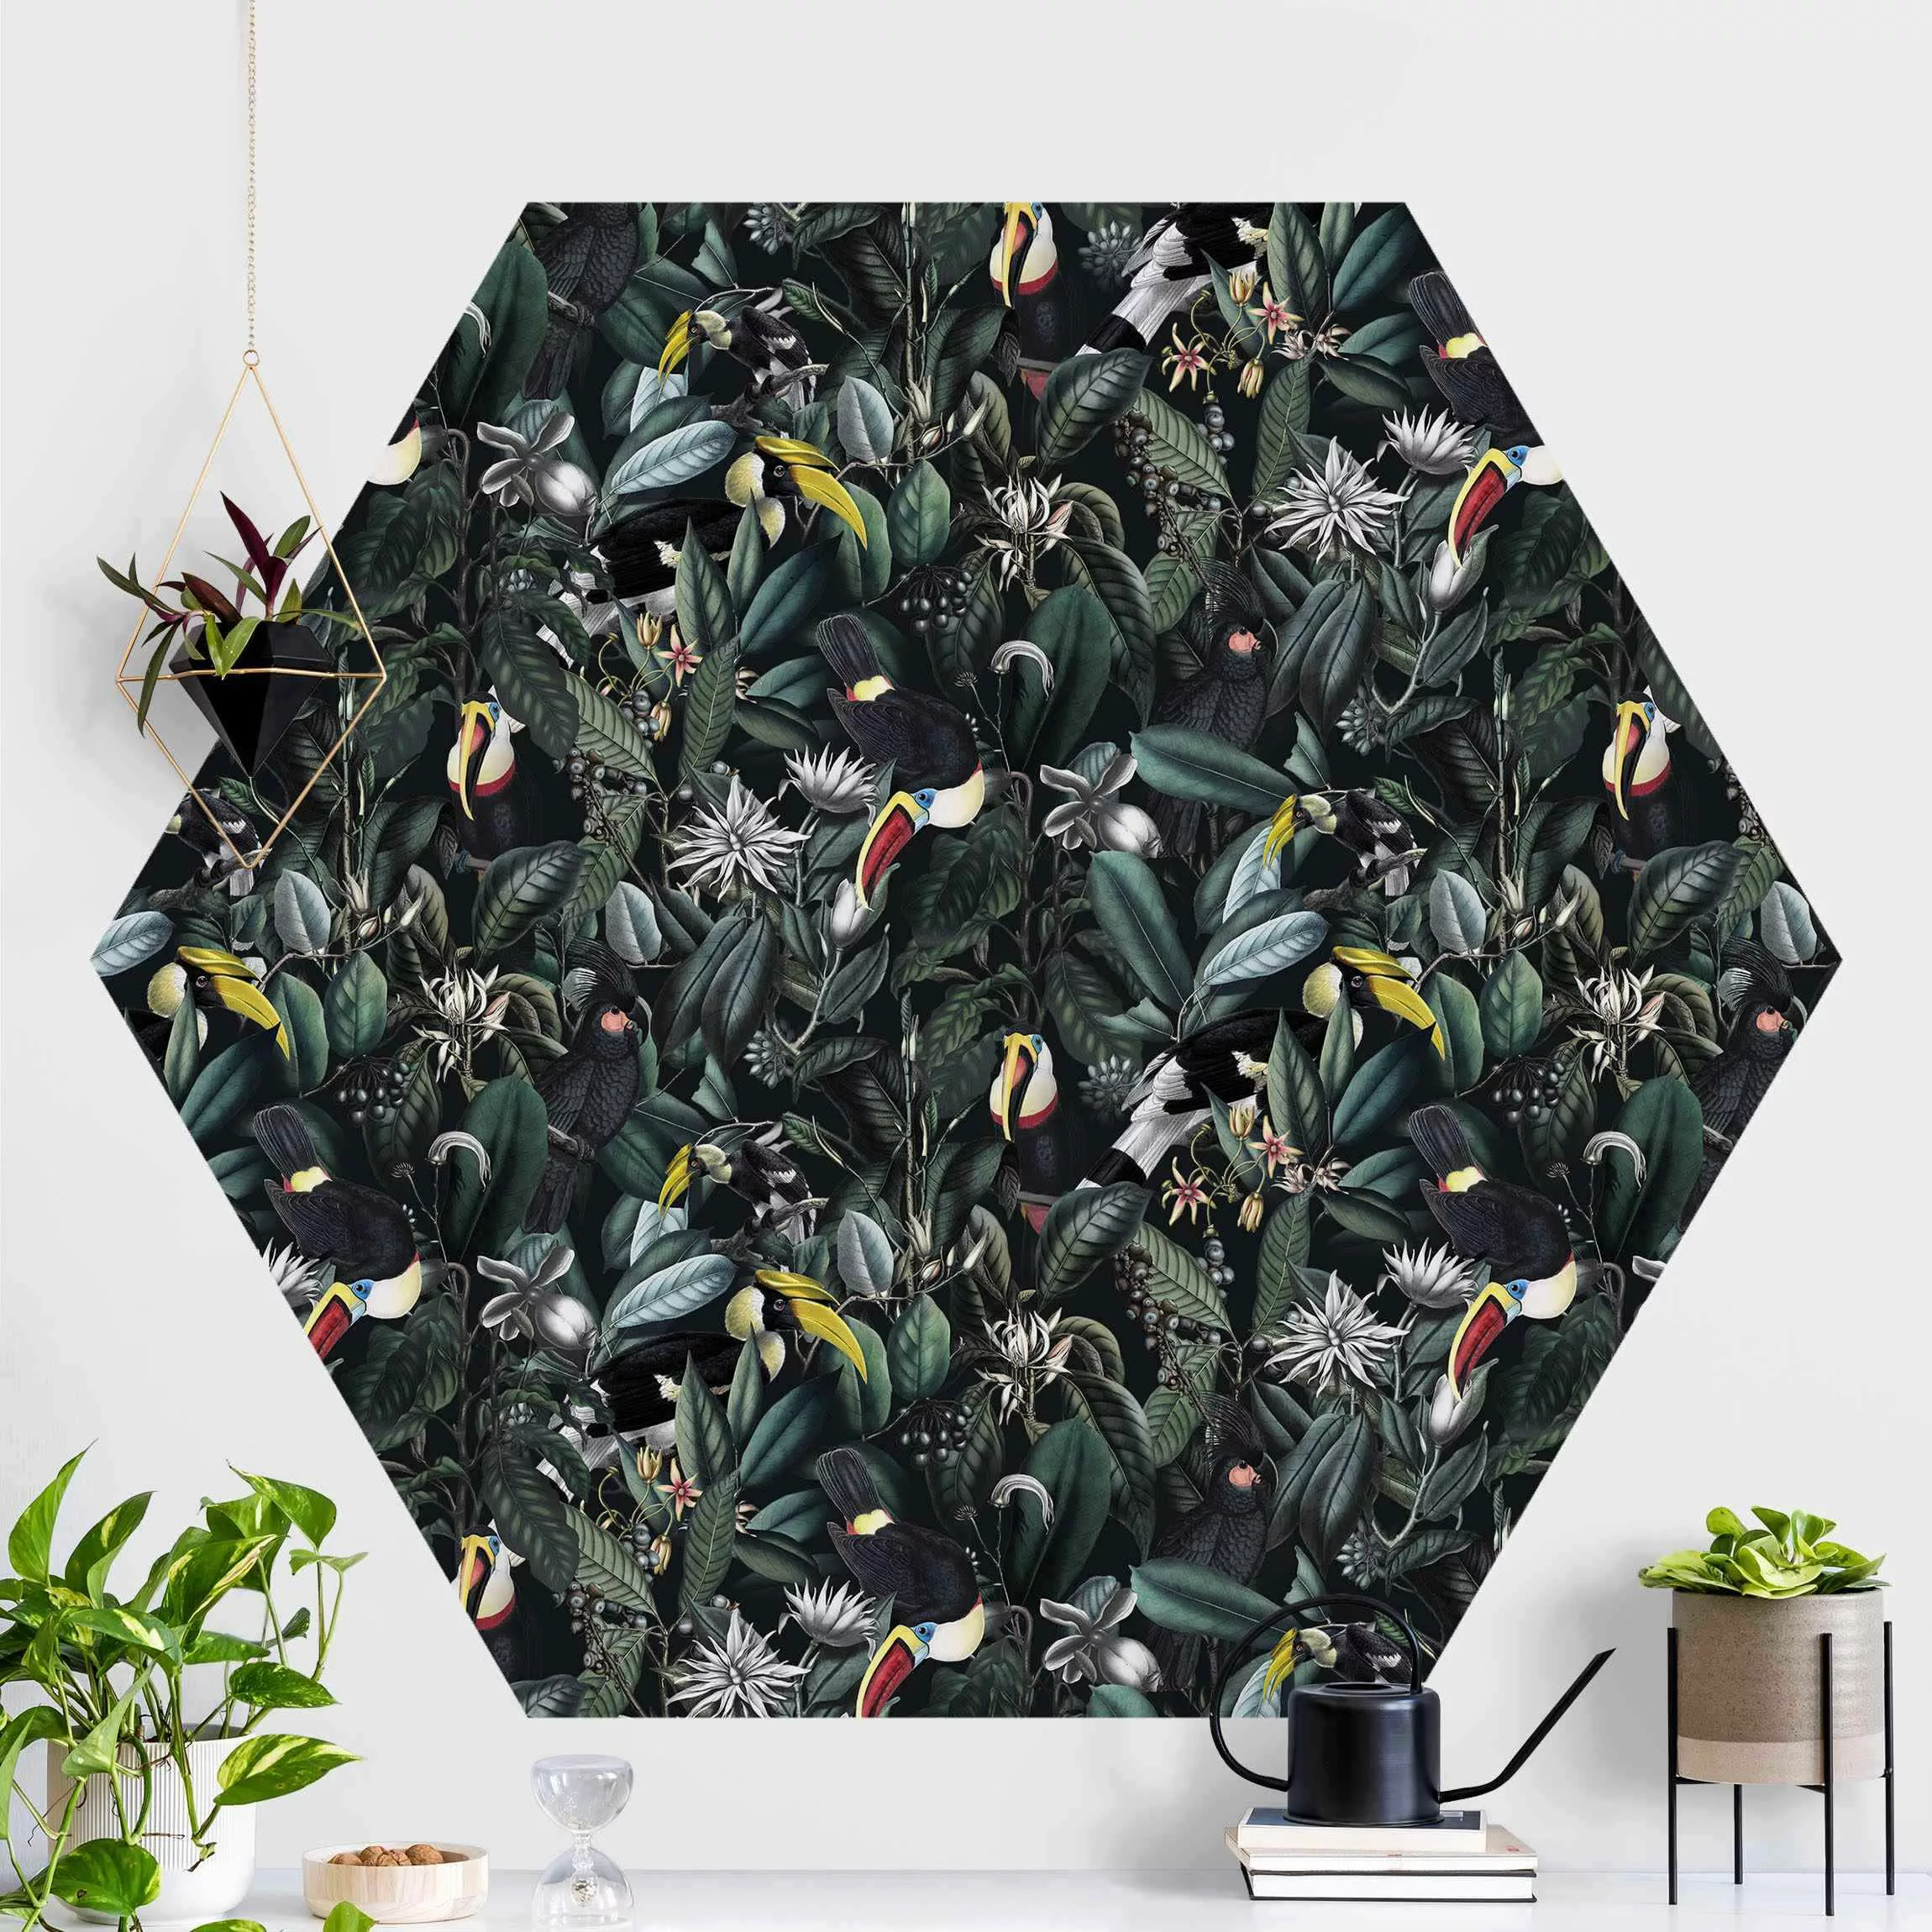 Hexagon Mustertapete selbstklebend Vögel in dunkler Botanik günstig online kaufen